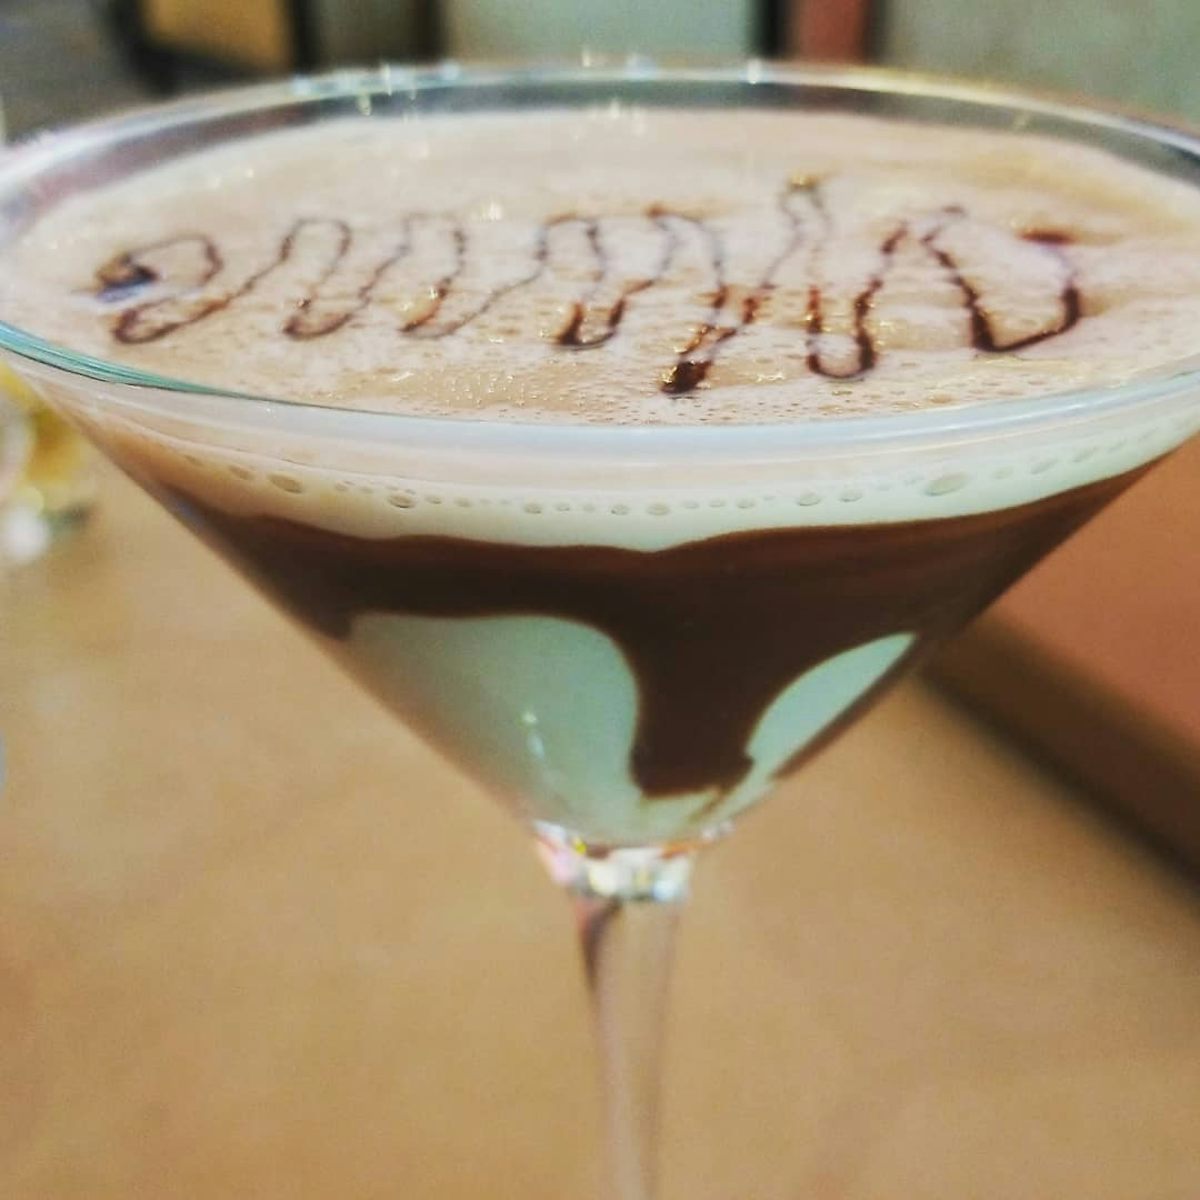 The elusive chocolate martini - finally found someone at the Atrium Bar to